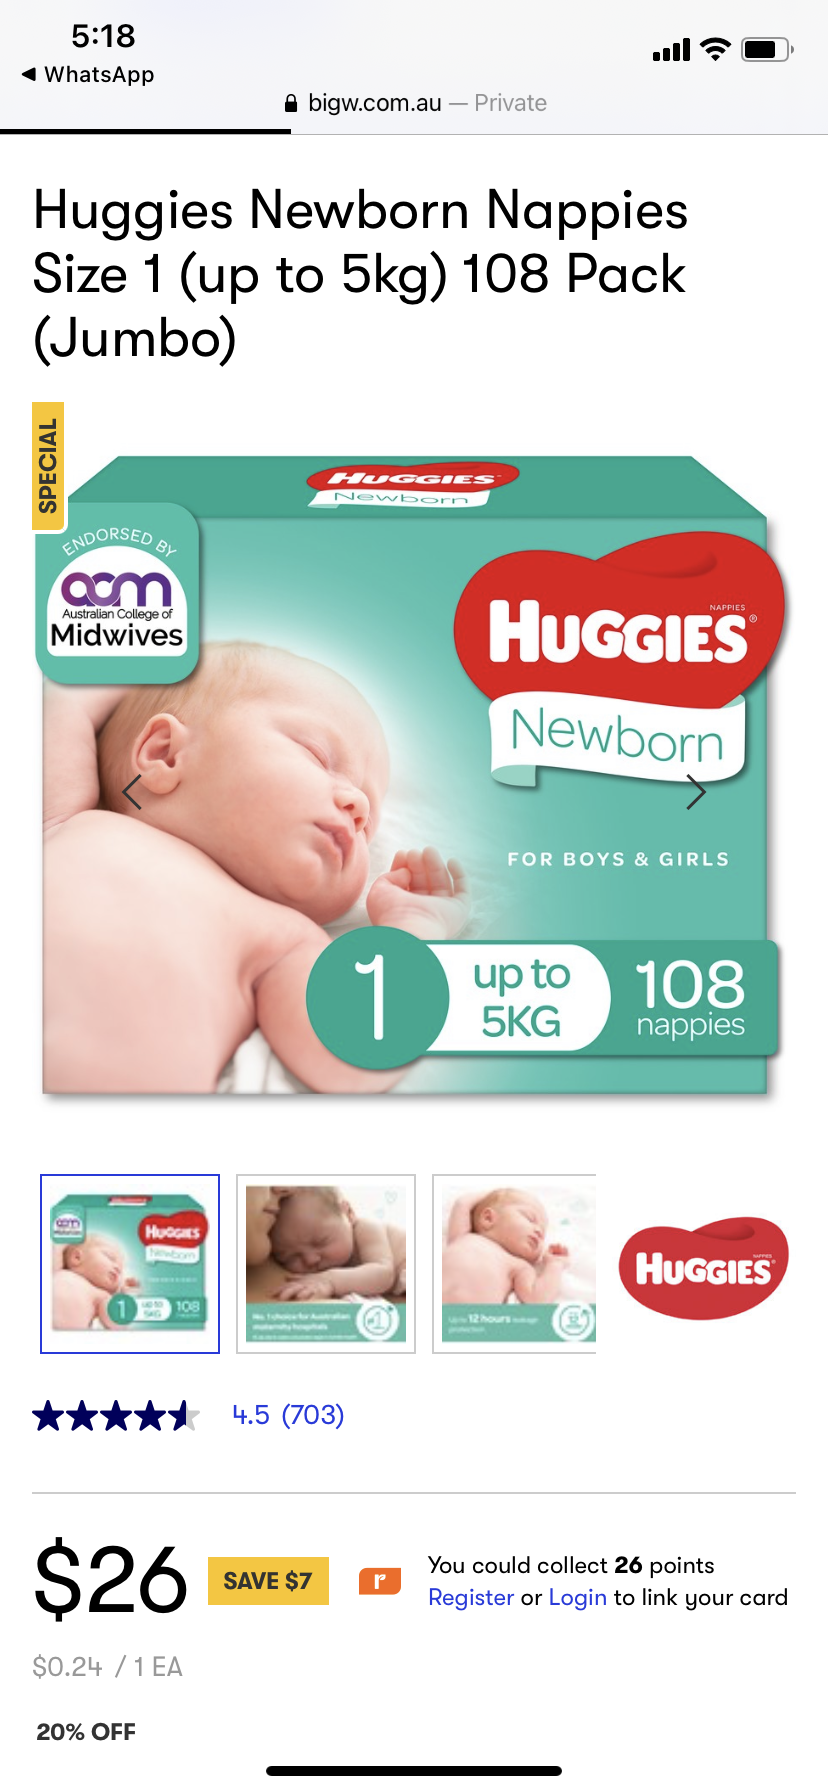 Huggies new born nappies